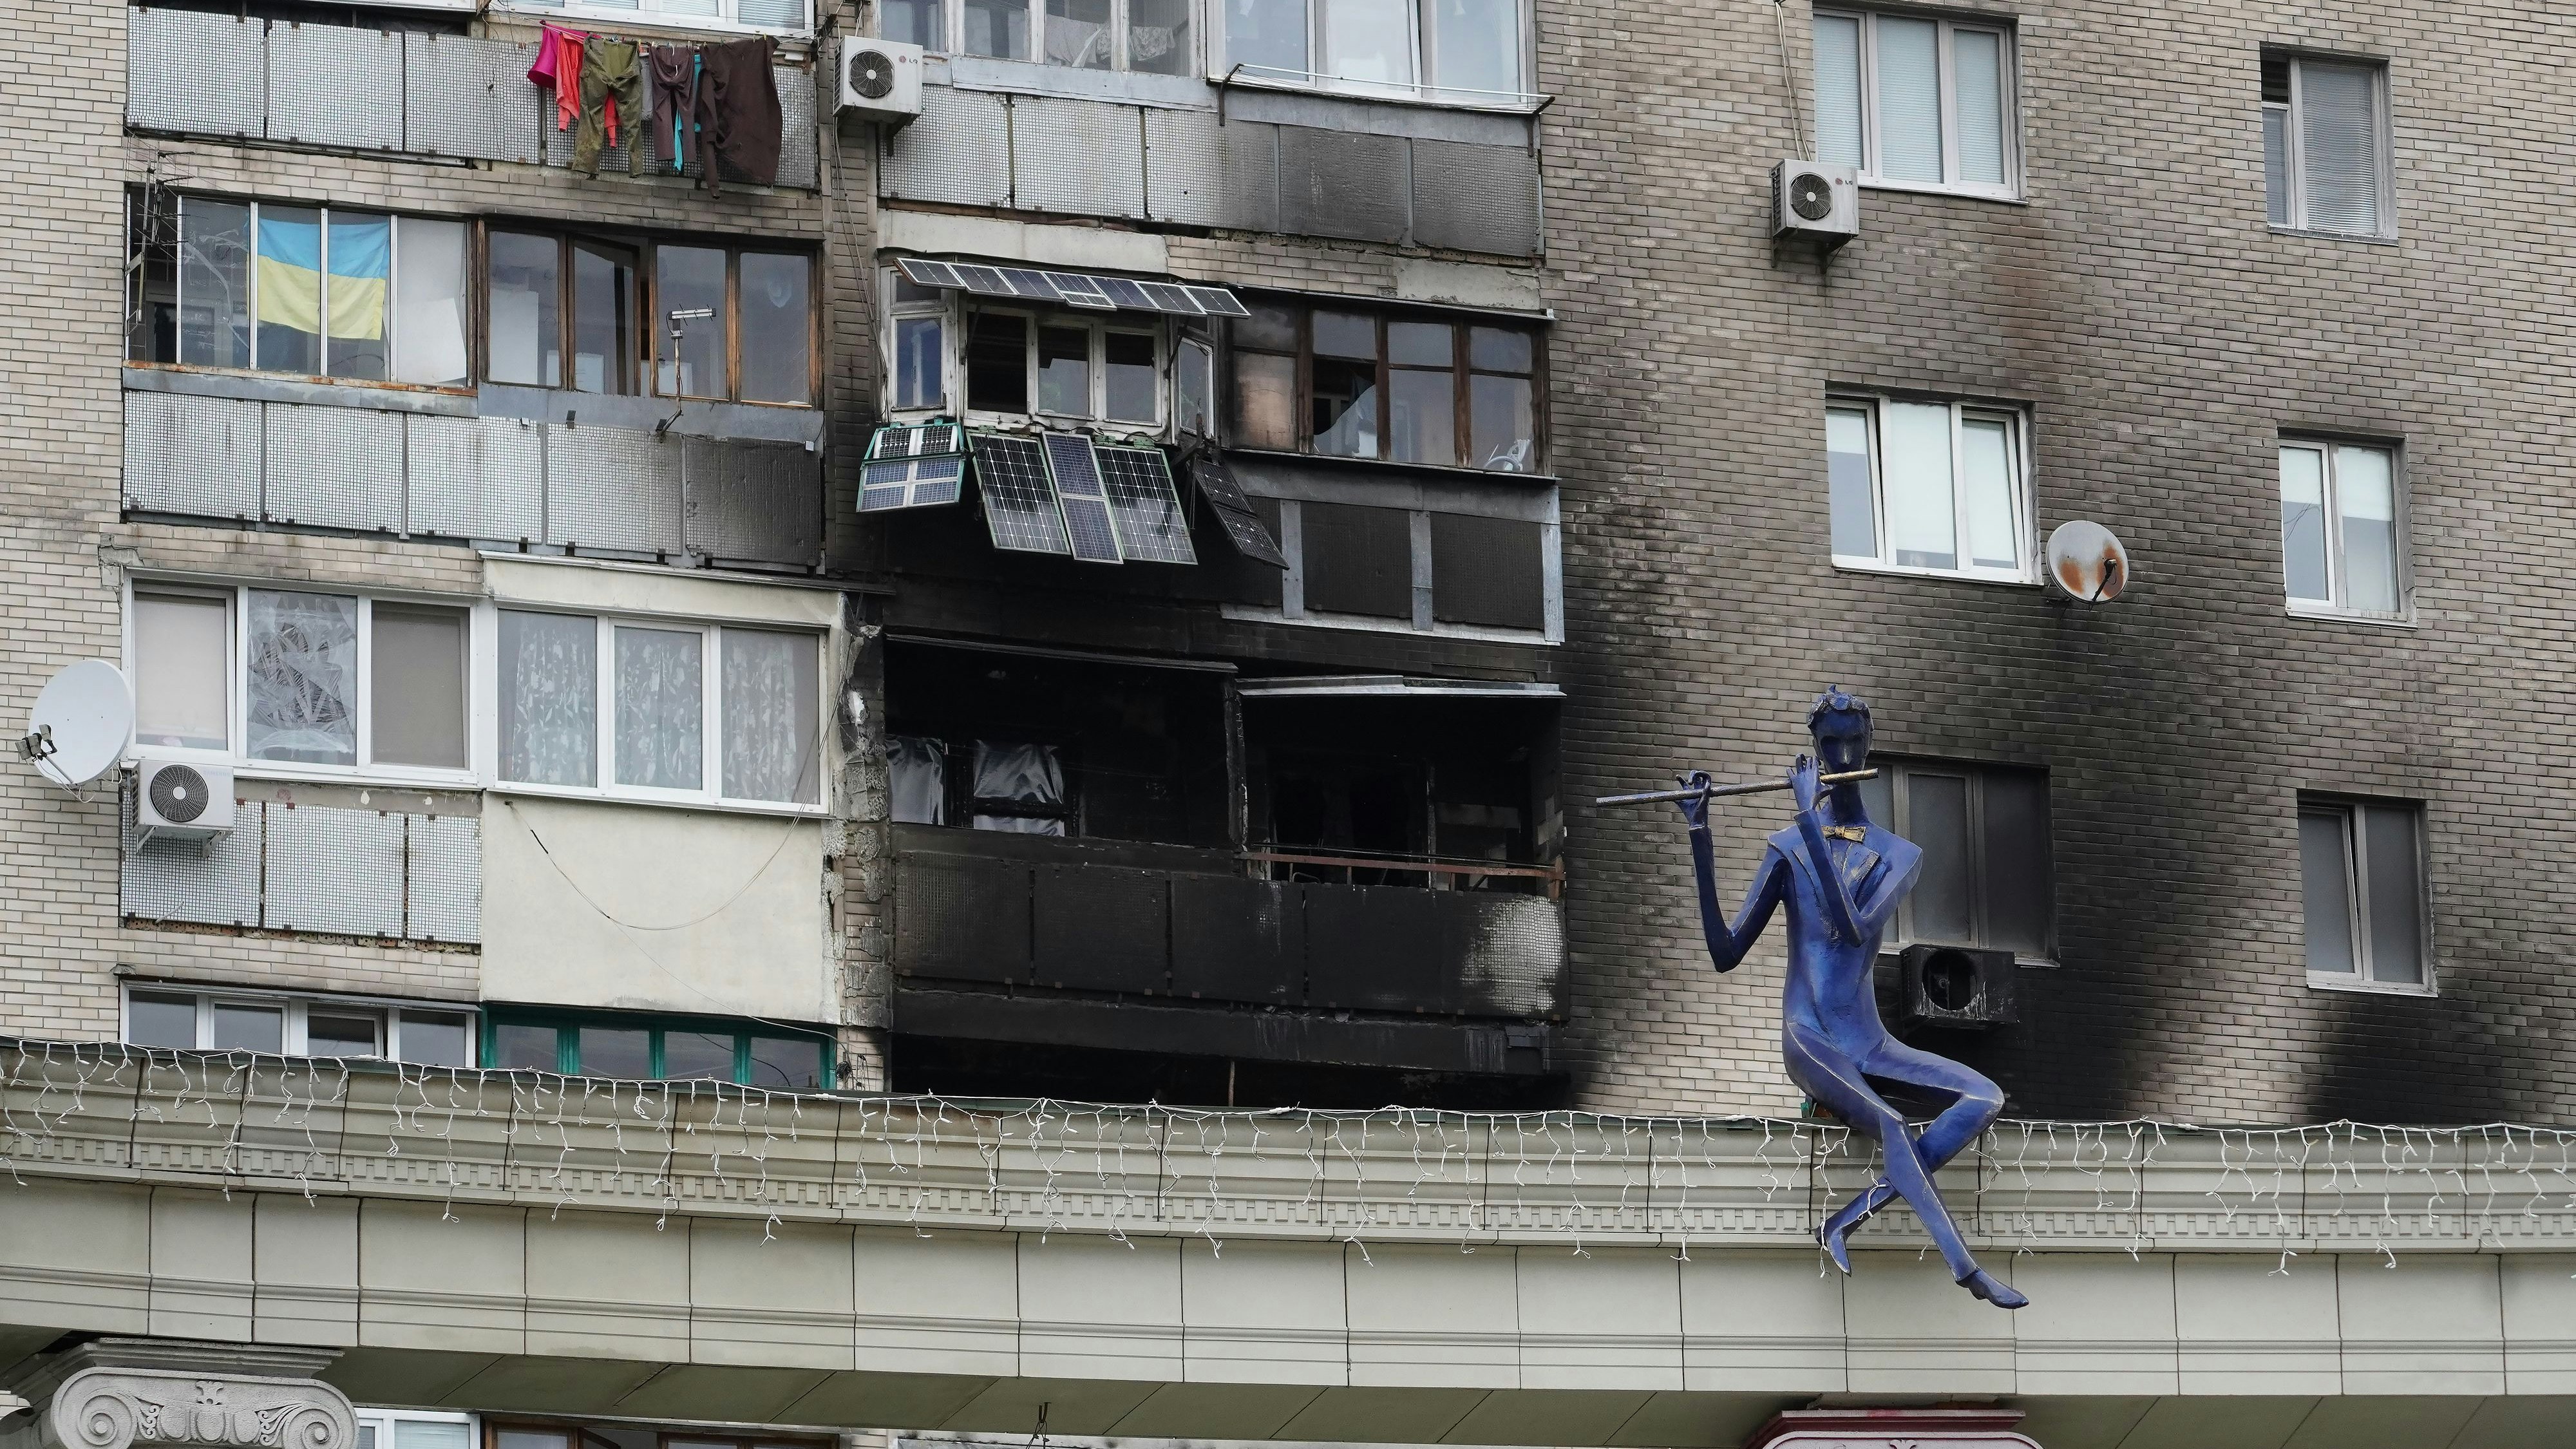 Zerstörung im ukrainischen Ort Irpin. Foto: Roman Petushkov/Xinhua/dpa